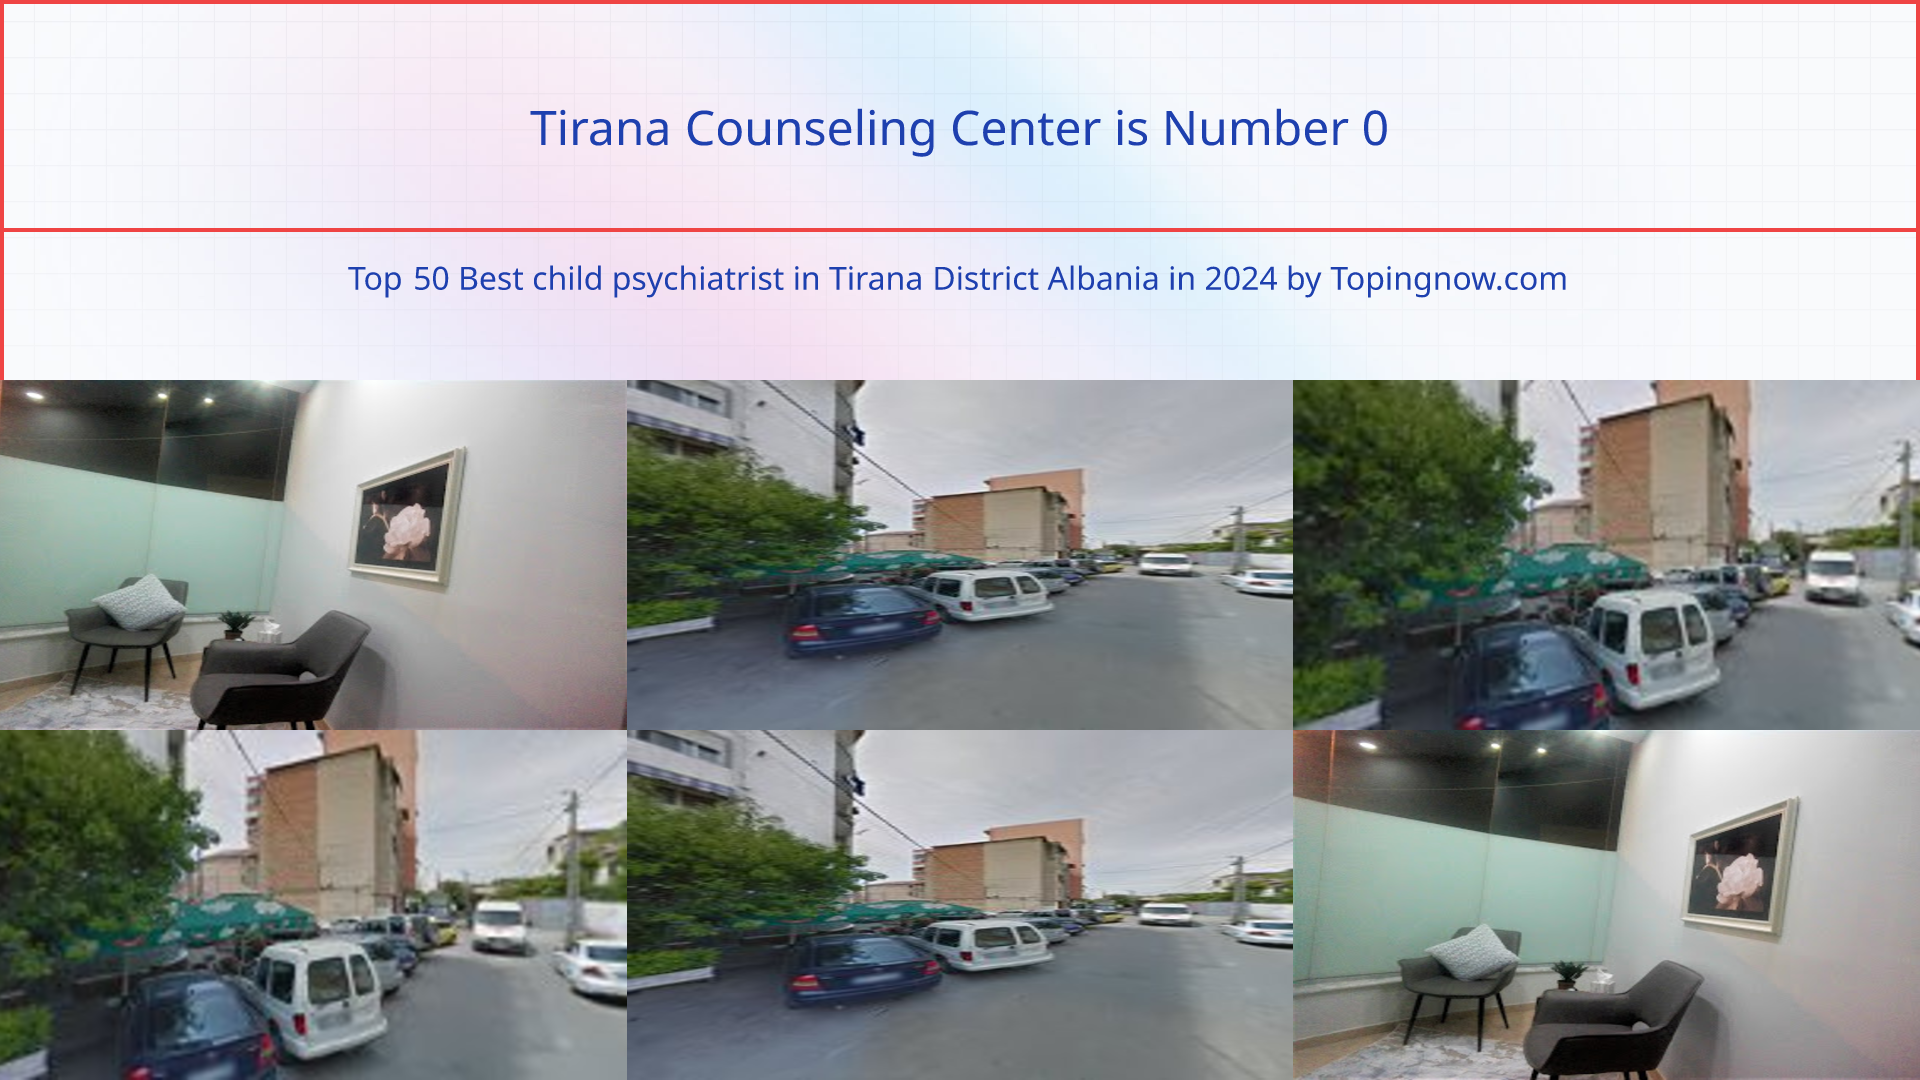 Tirana Counseling Center: Top 50 Best child psychiatrist in Tirana District Albania in 2024